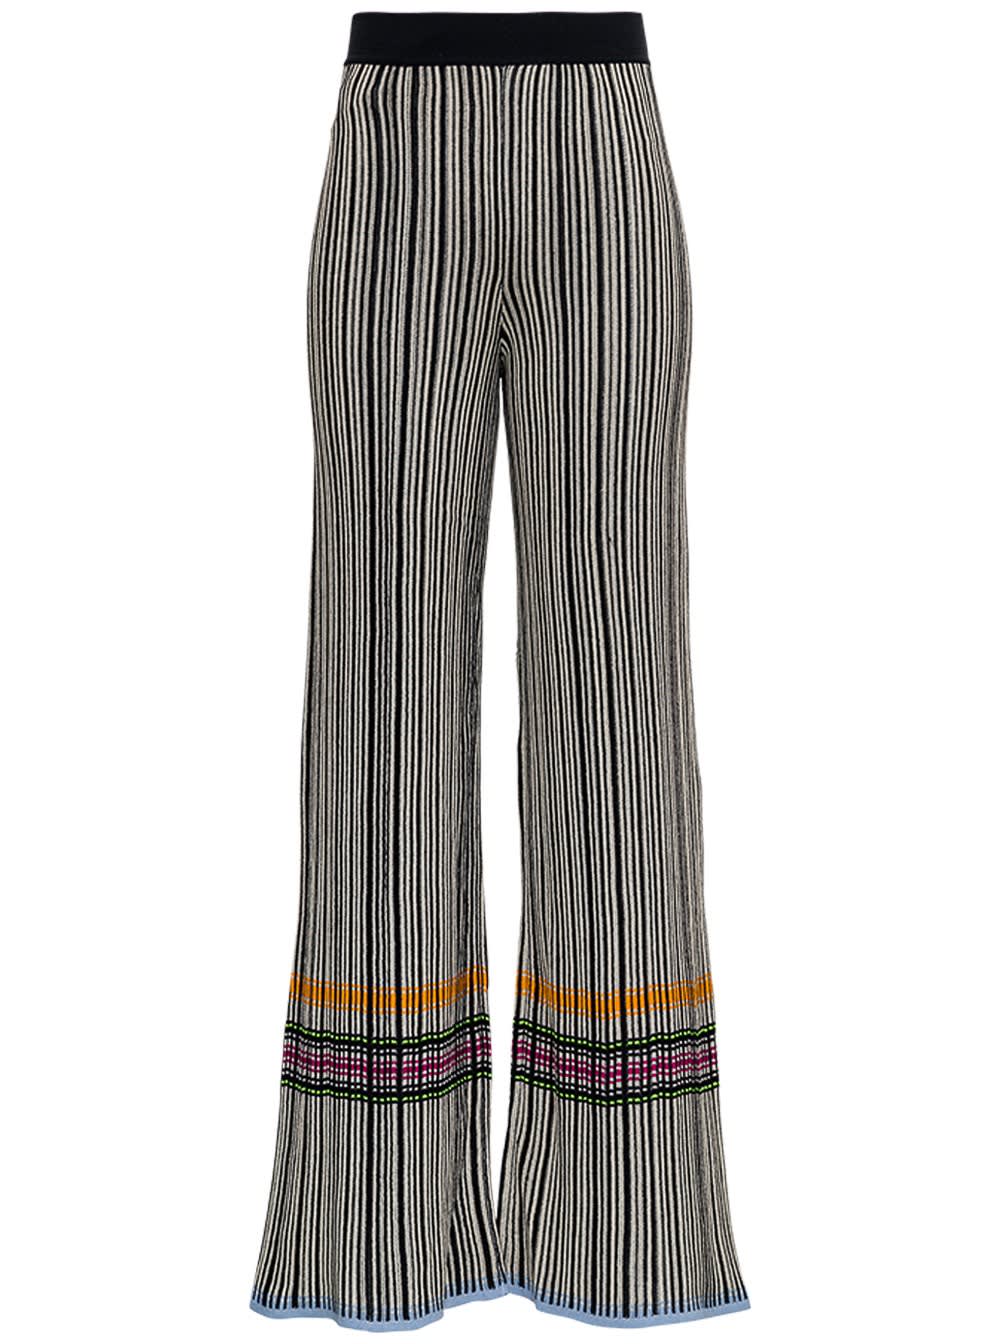 M Missoni Striped Cotton Blend Trousers